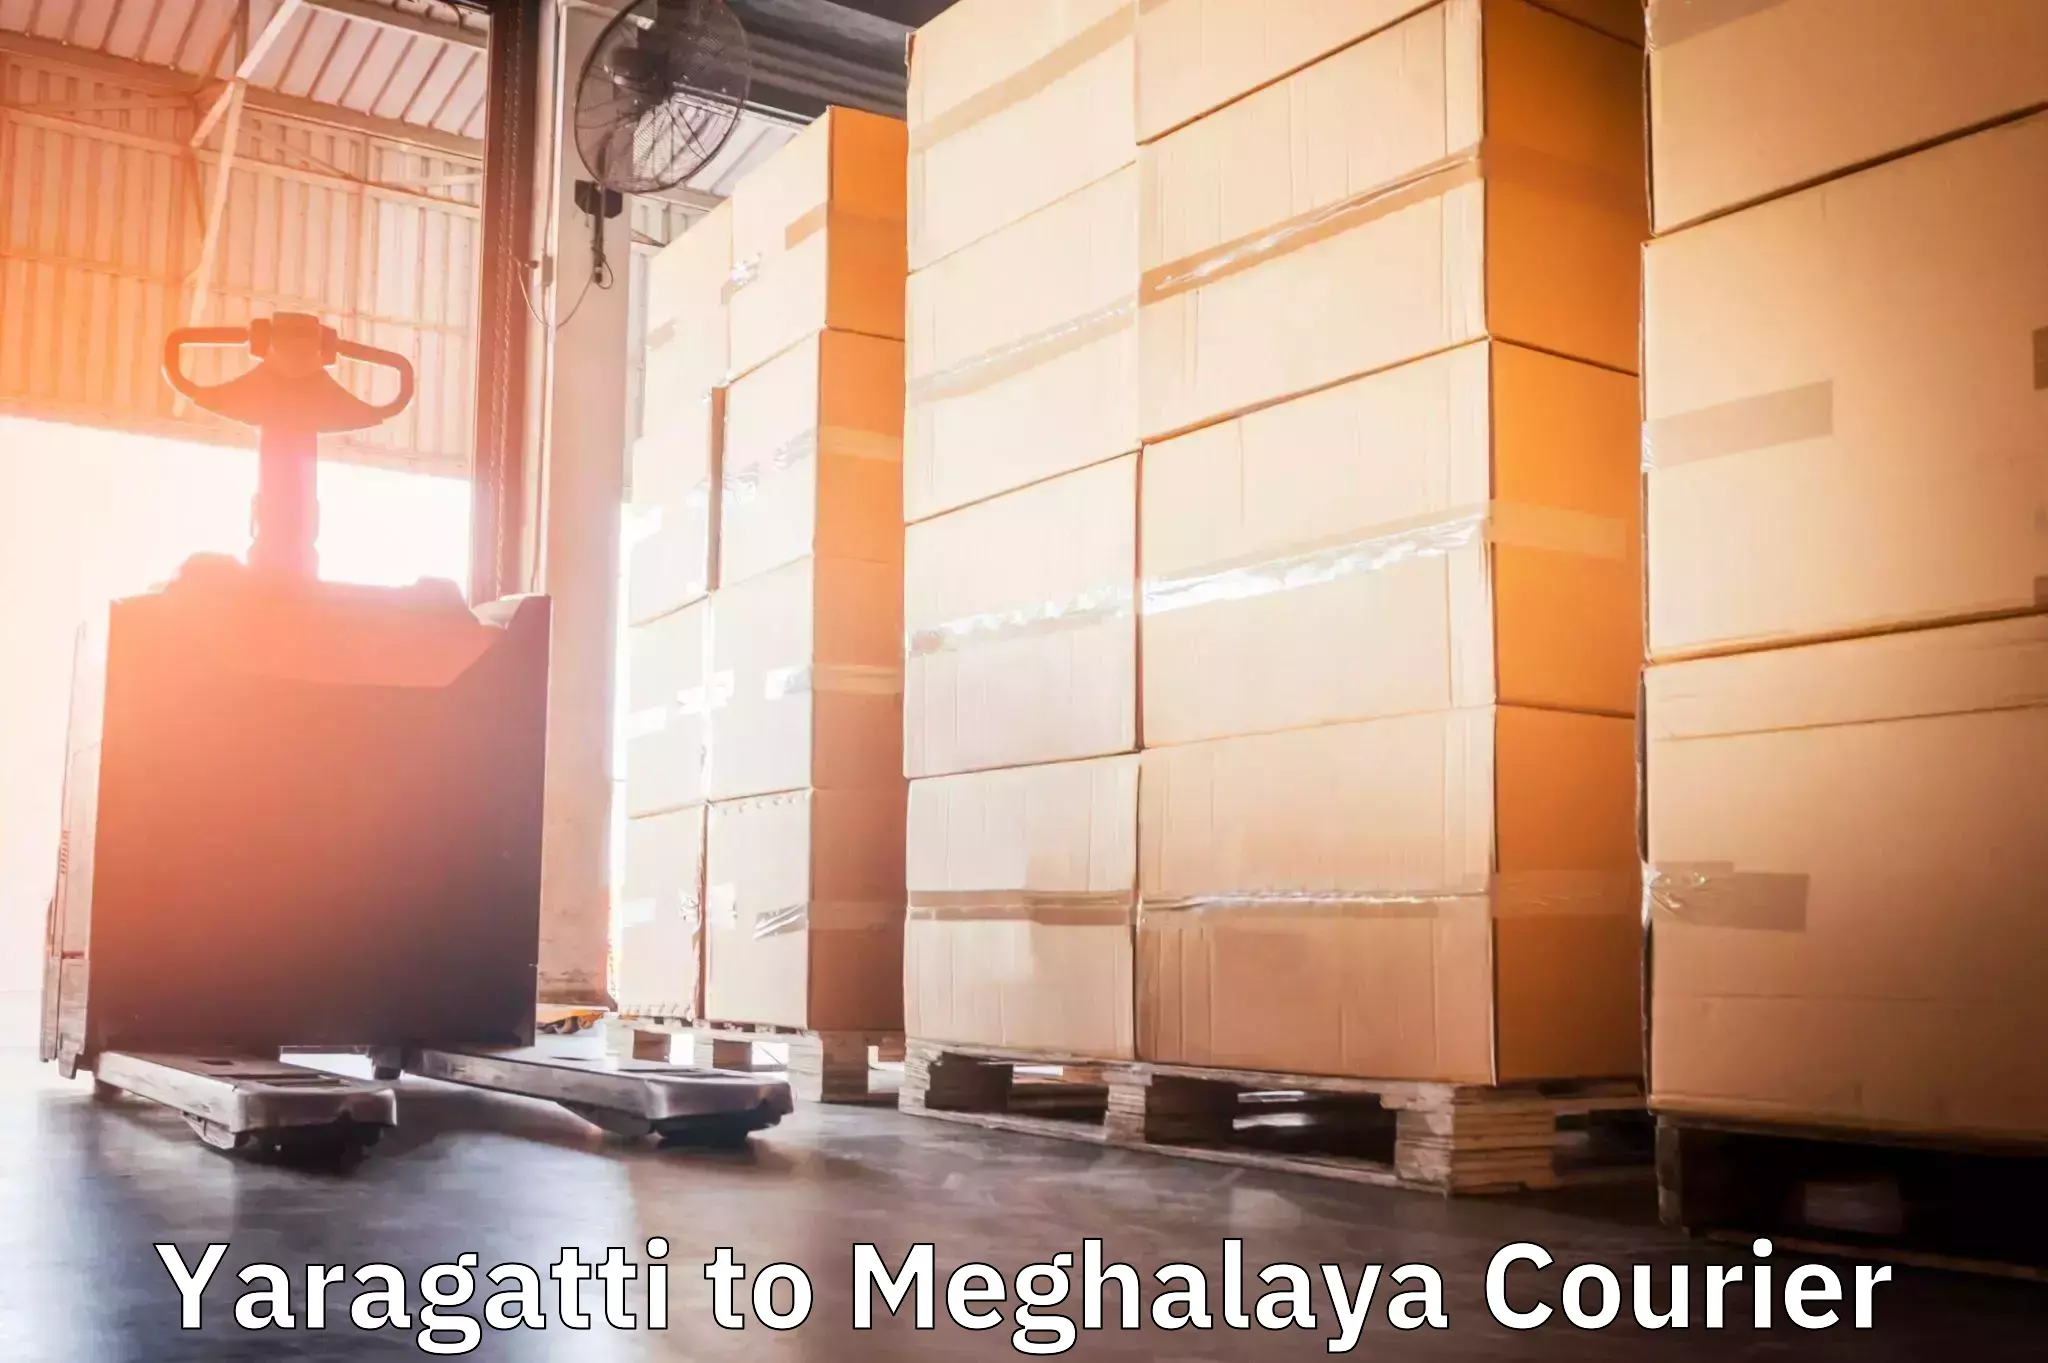 Cargo delivery service Yaragatti to Umsaw